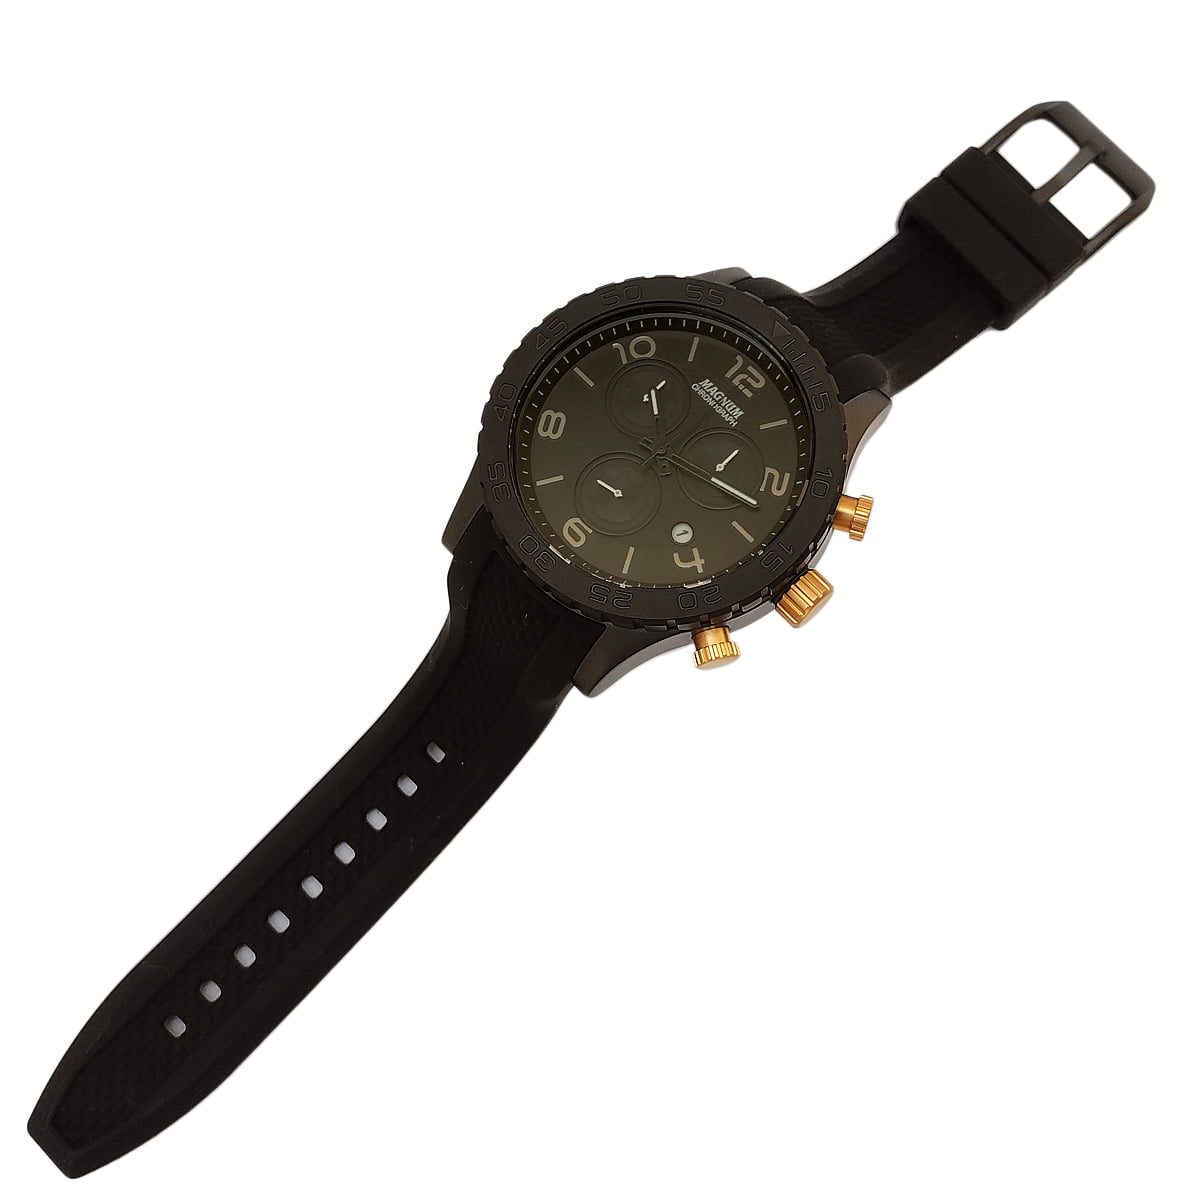 Relógio Magnum Masculino Esportivo Oversized Cronografo Azul MA33504F no  Shoptime